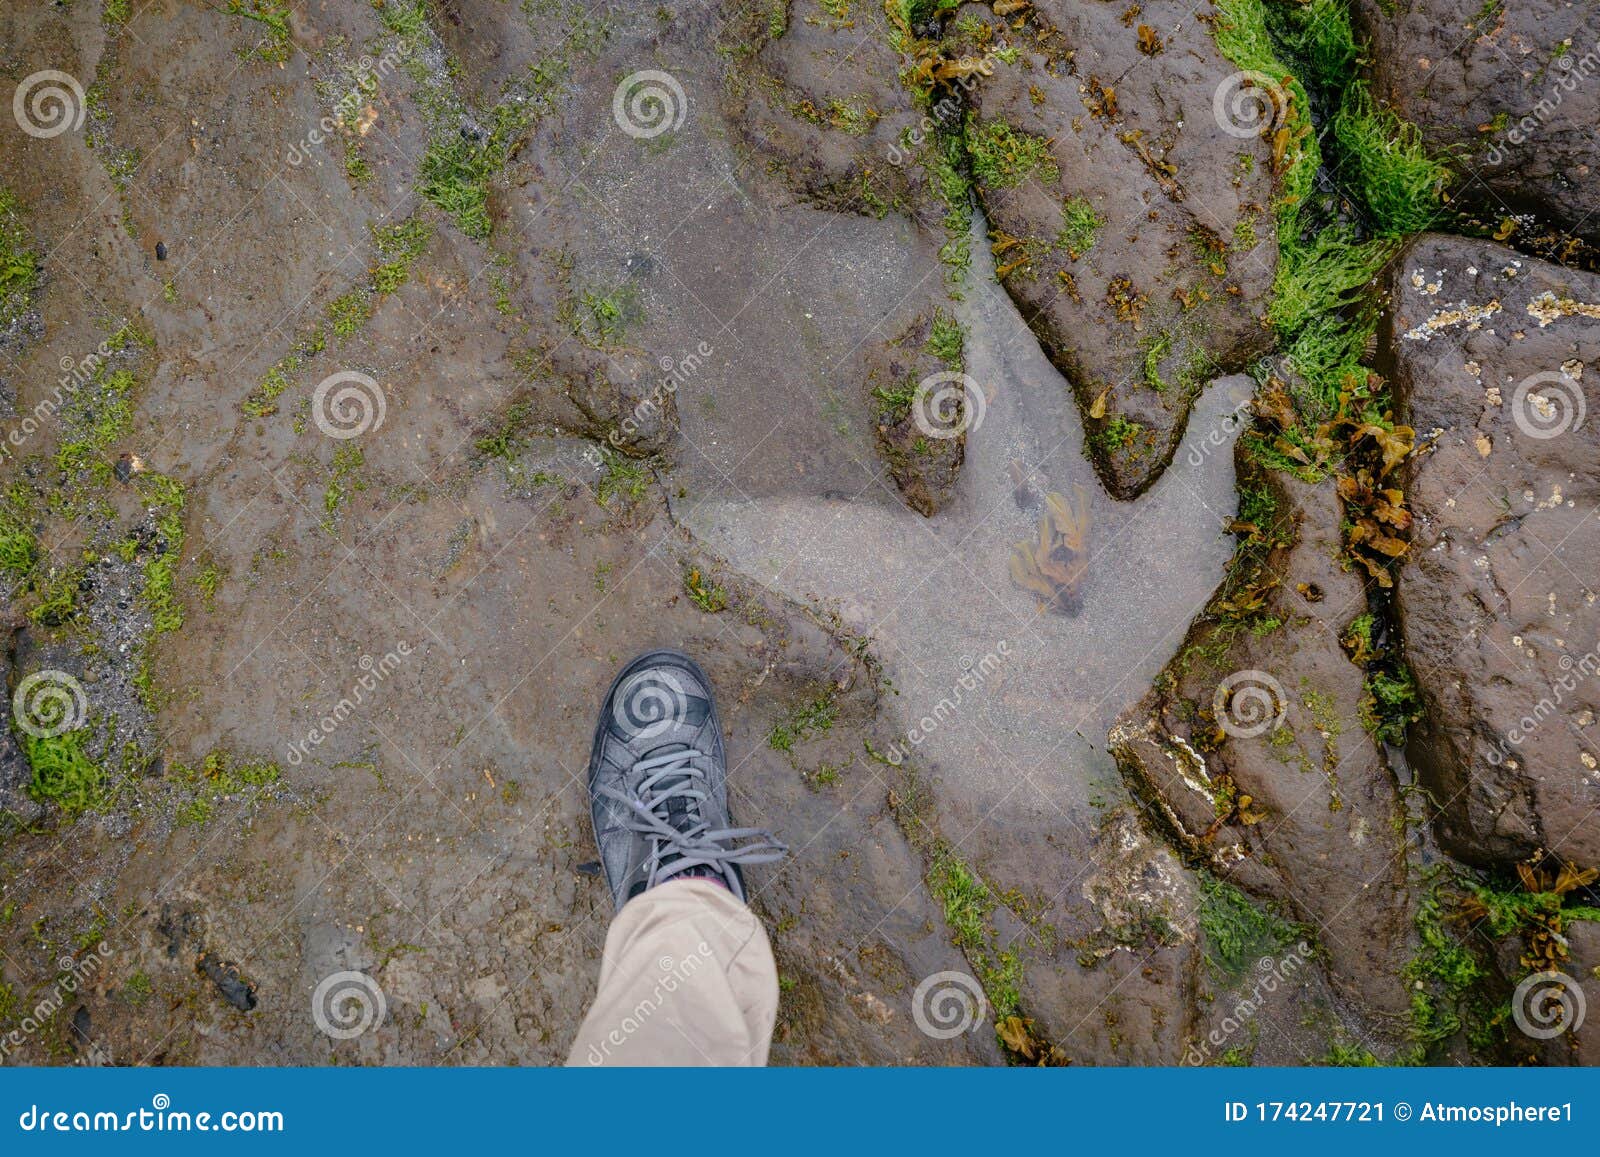 human foot compared to a dinosaur footprint on the an corran beach, near skye, portree